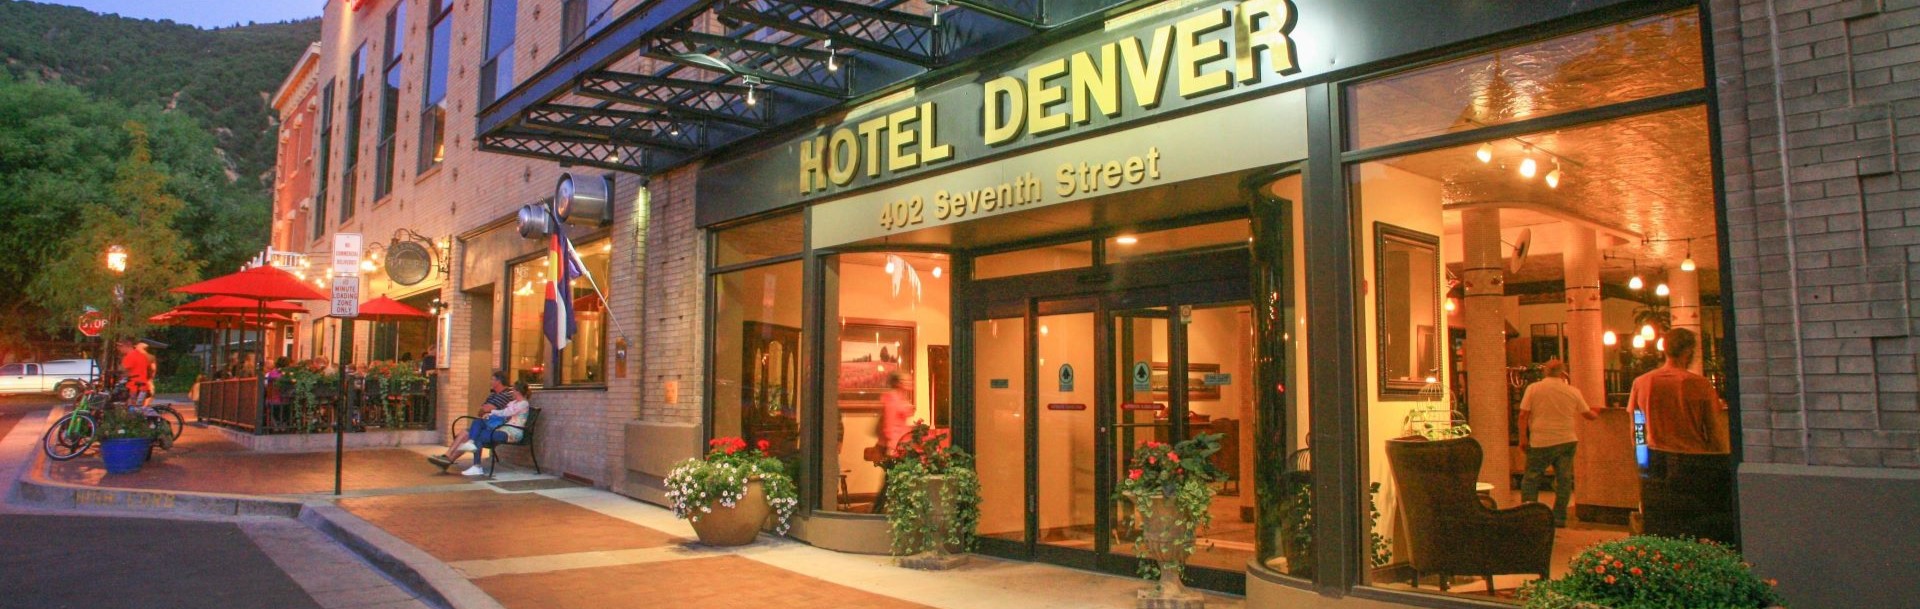 Hotel Denver, Glenwood Springs 